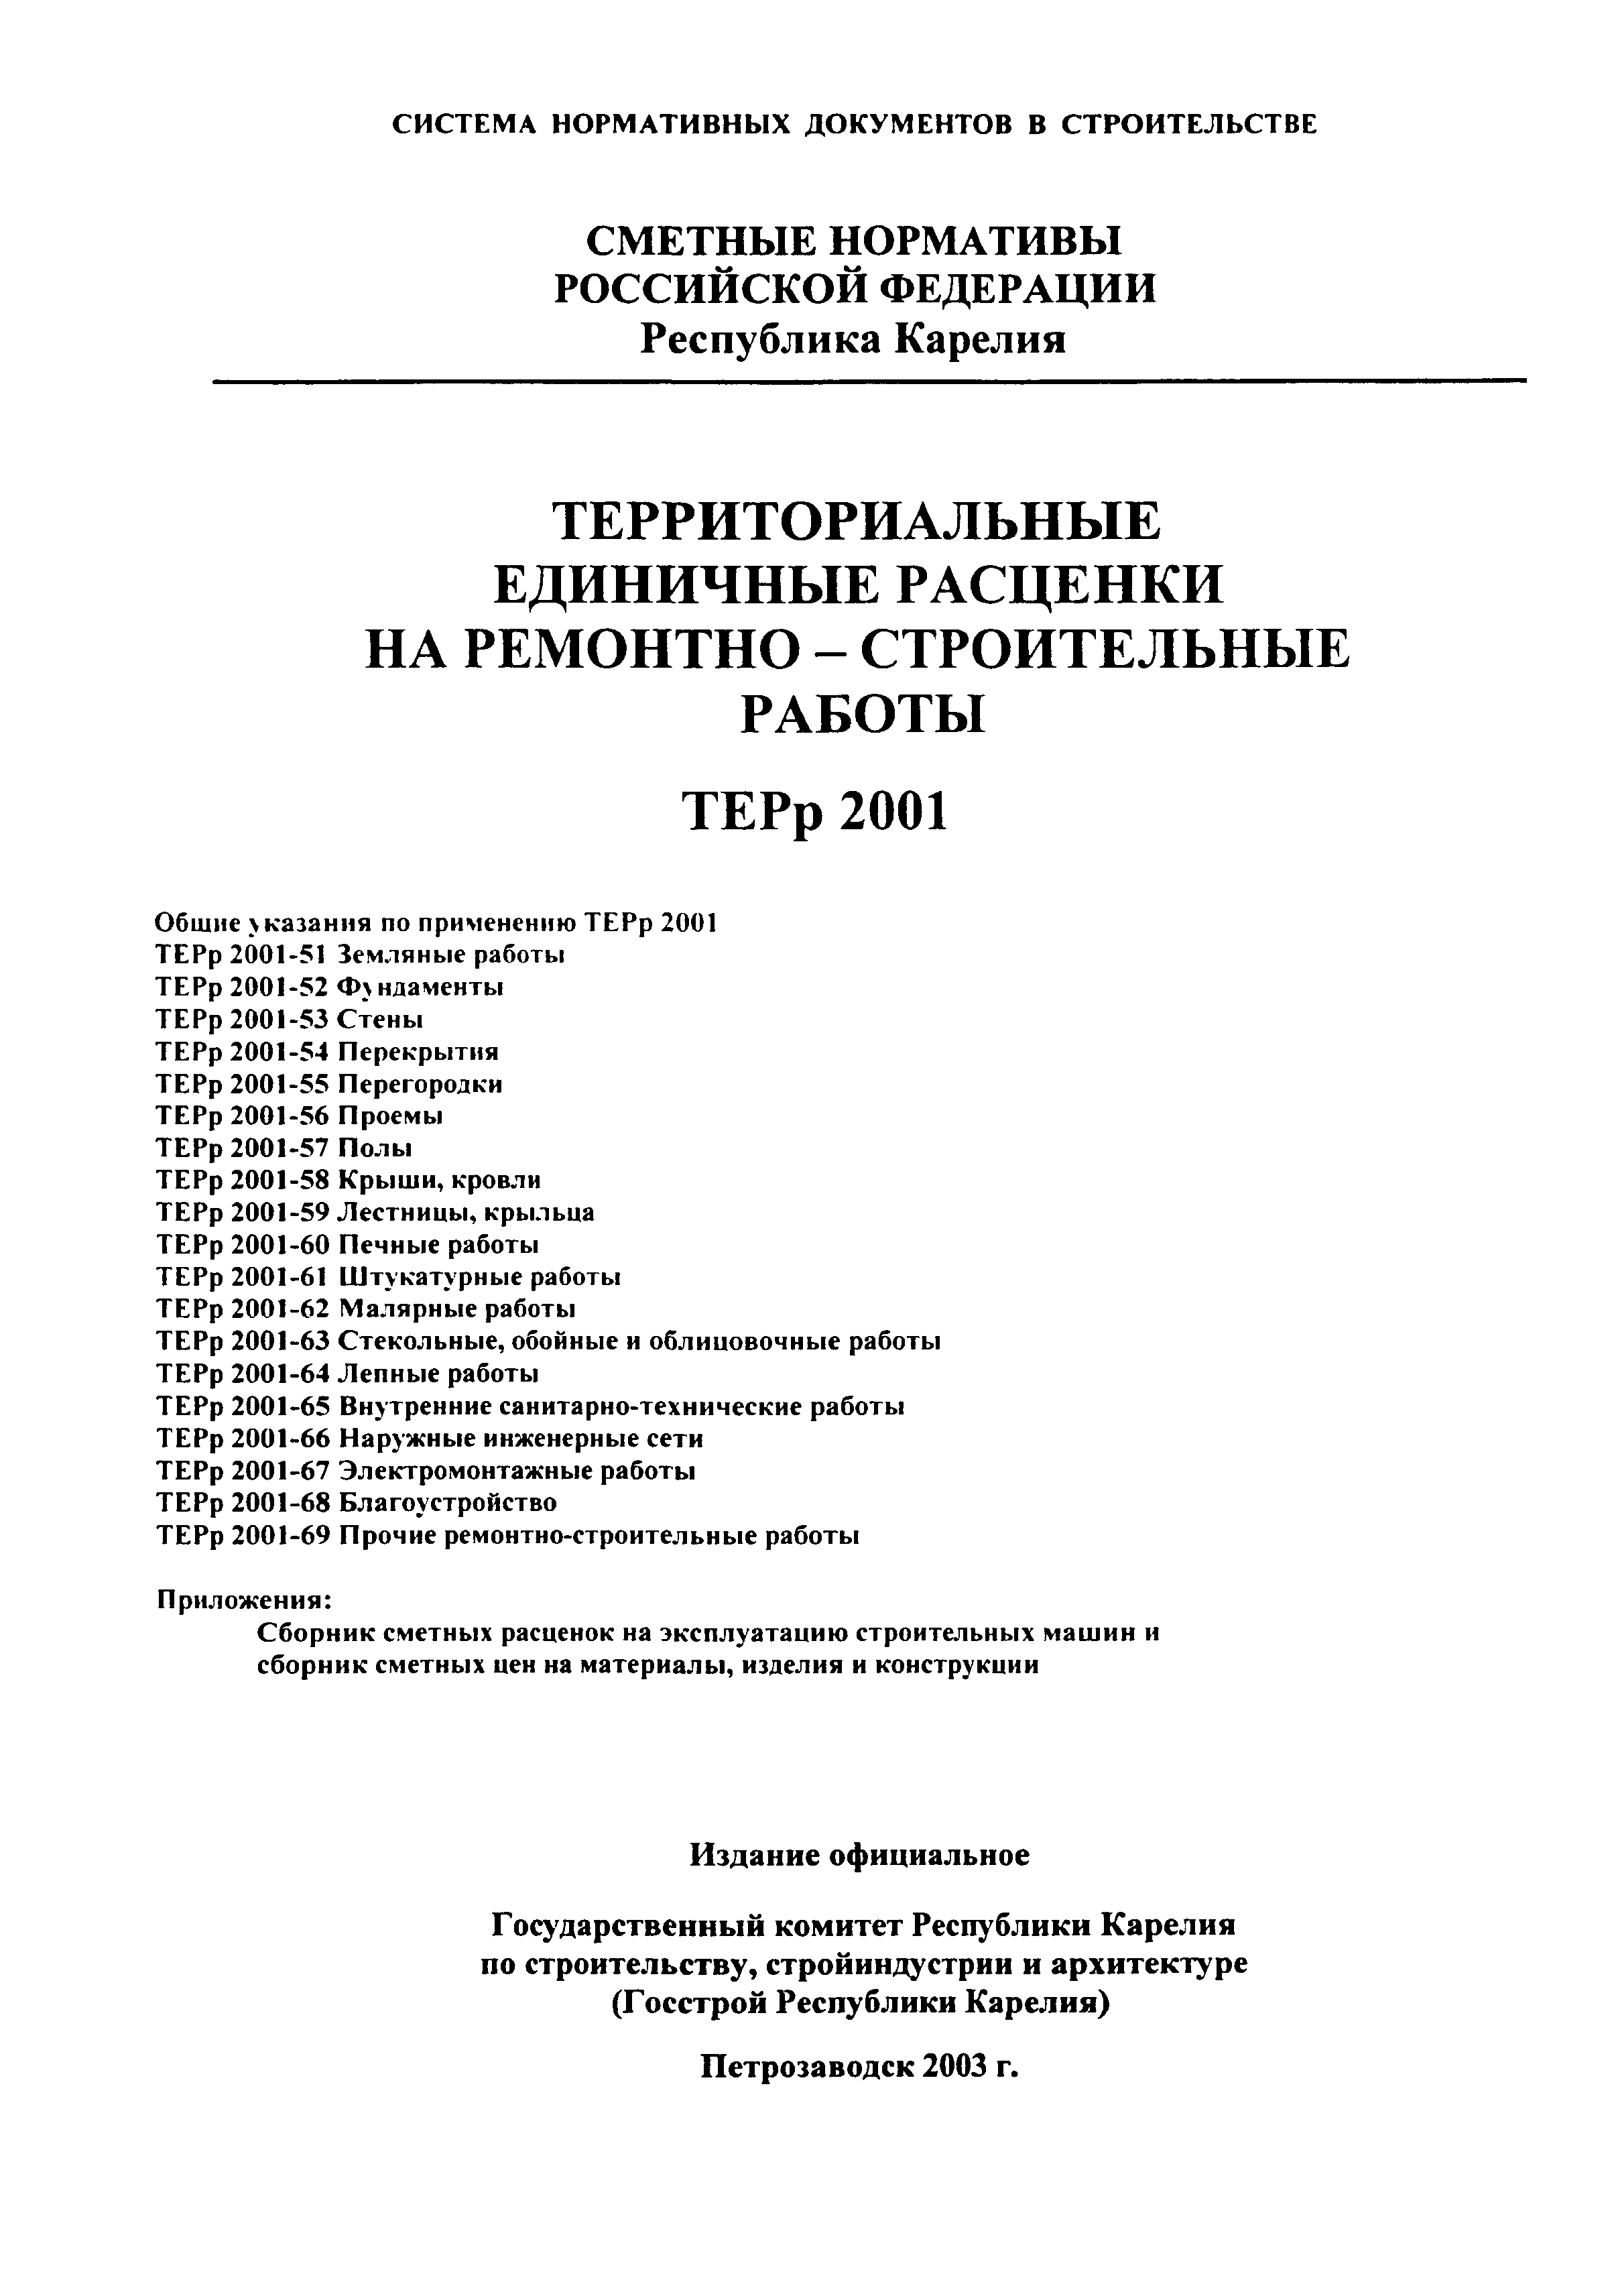 ТЕРр Республика Карелия 2001-64